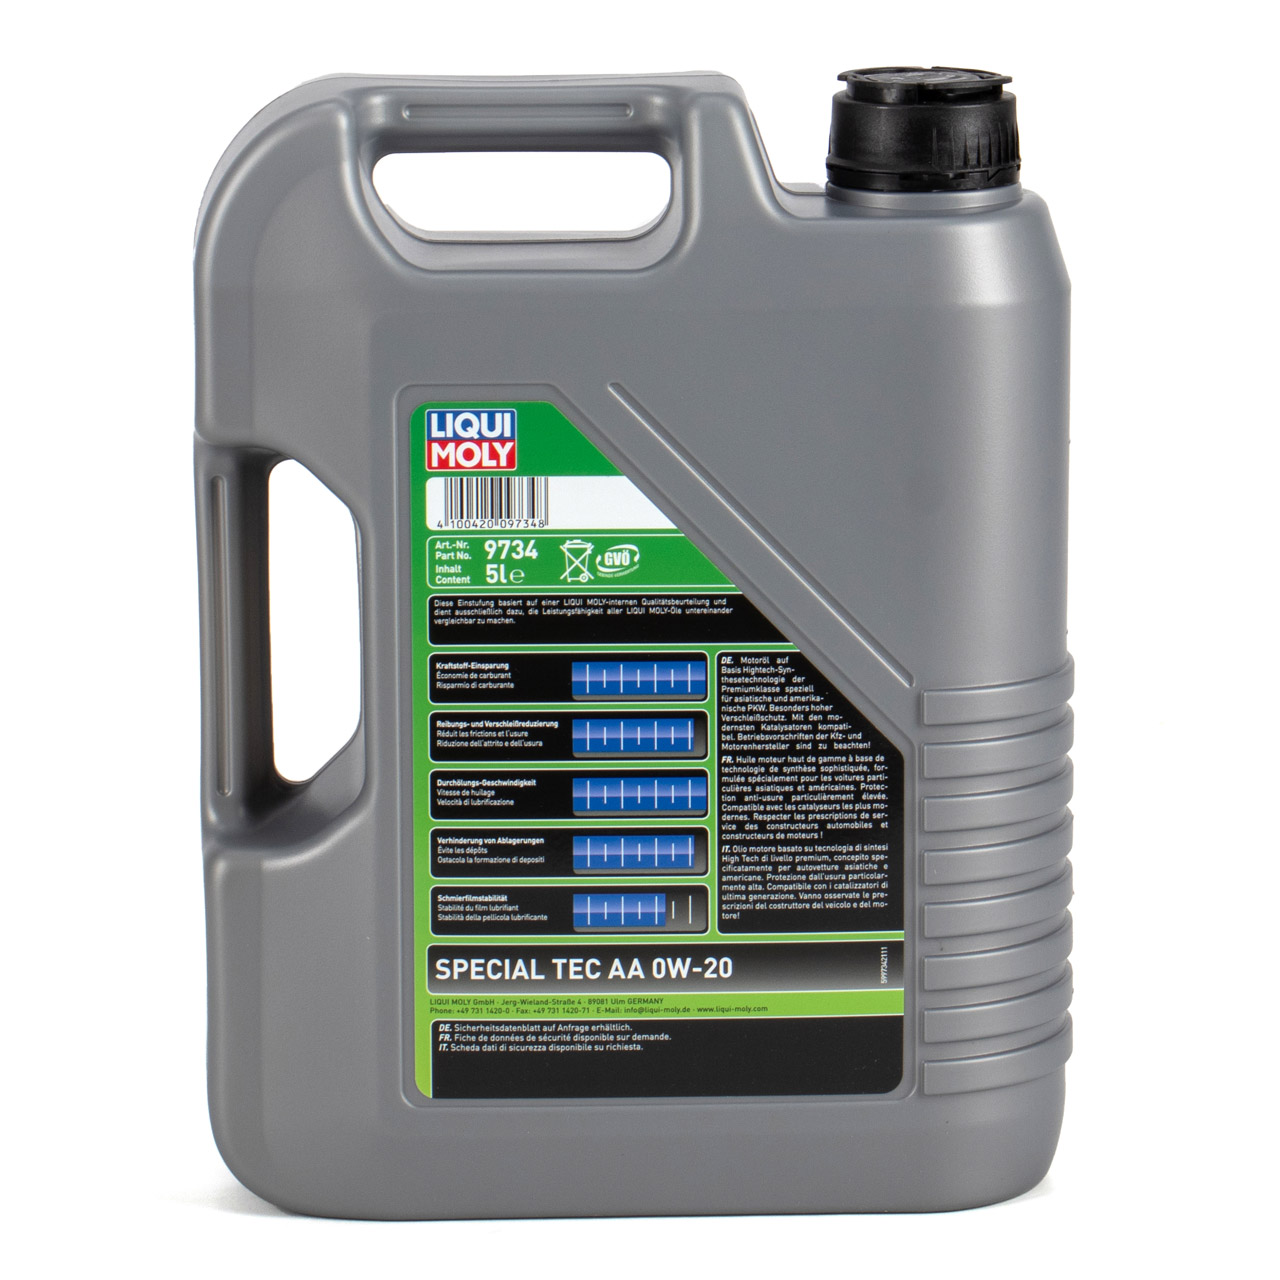 10L 10 Liter LIQUI MOLY 9734 SPECIAL TEC AA 0W-20 Motoröl Öl API SP ASIA AMERICA